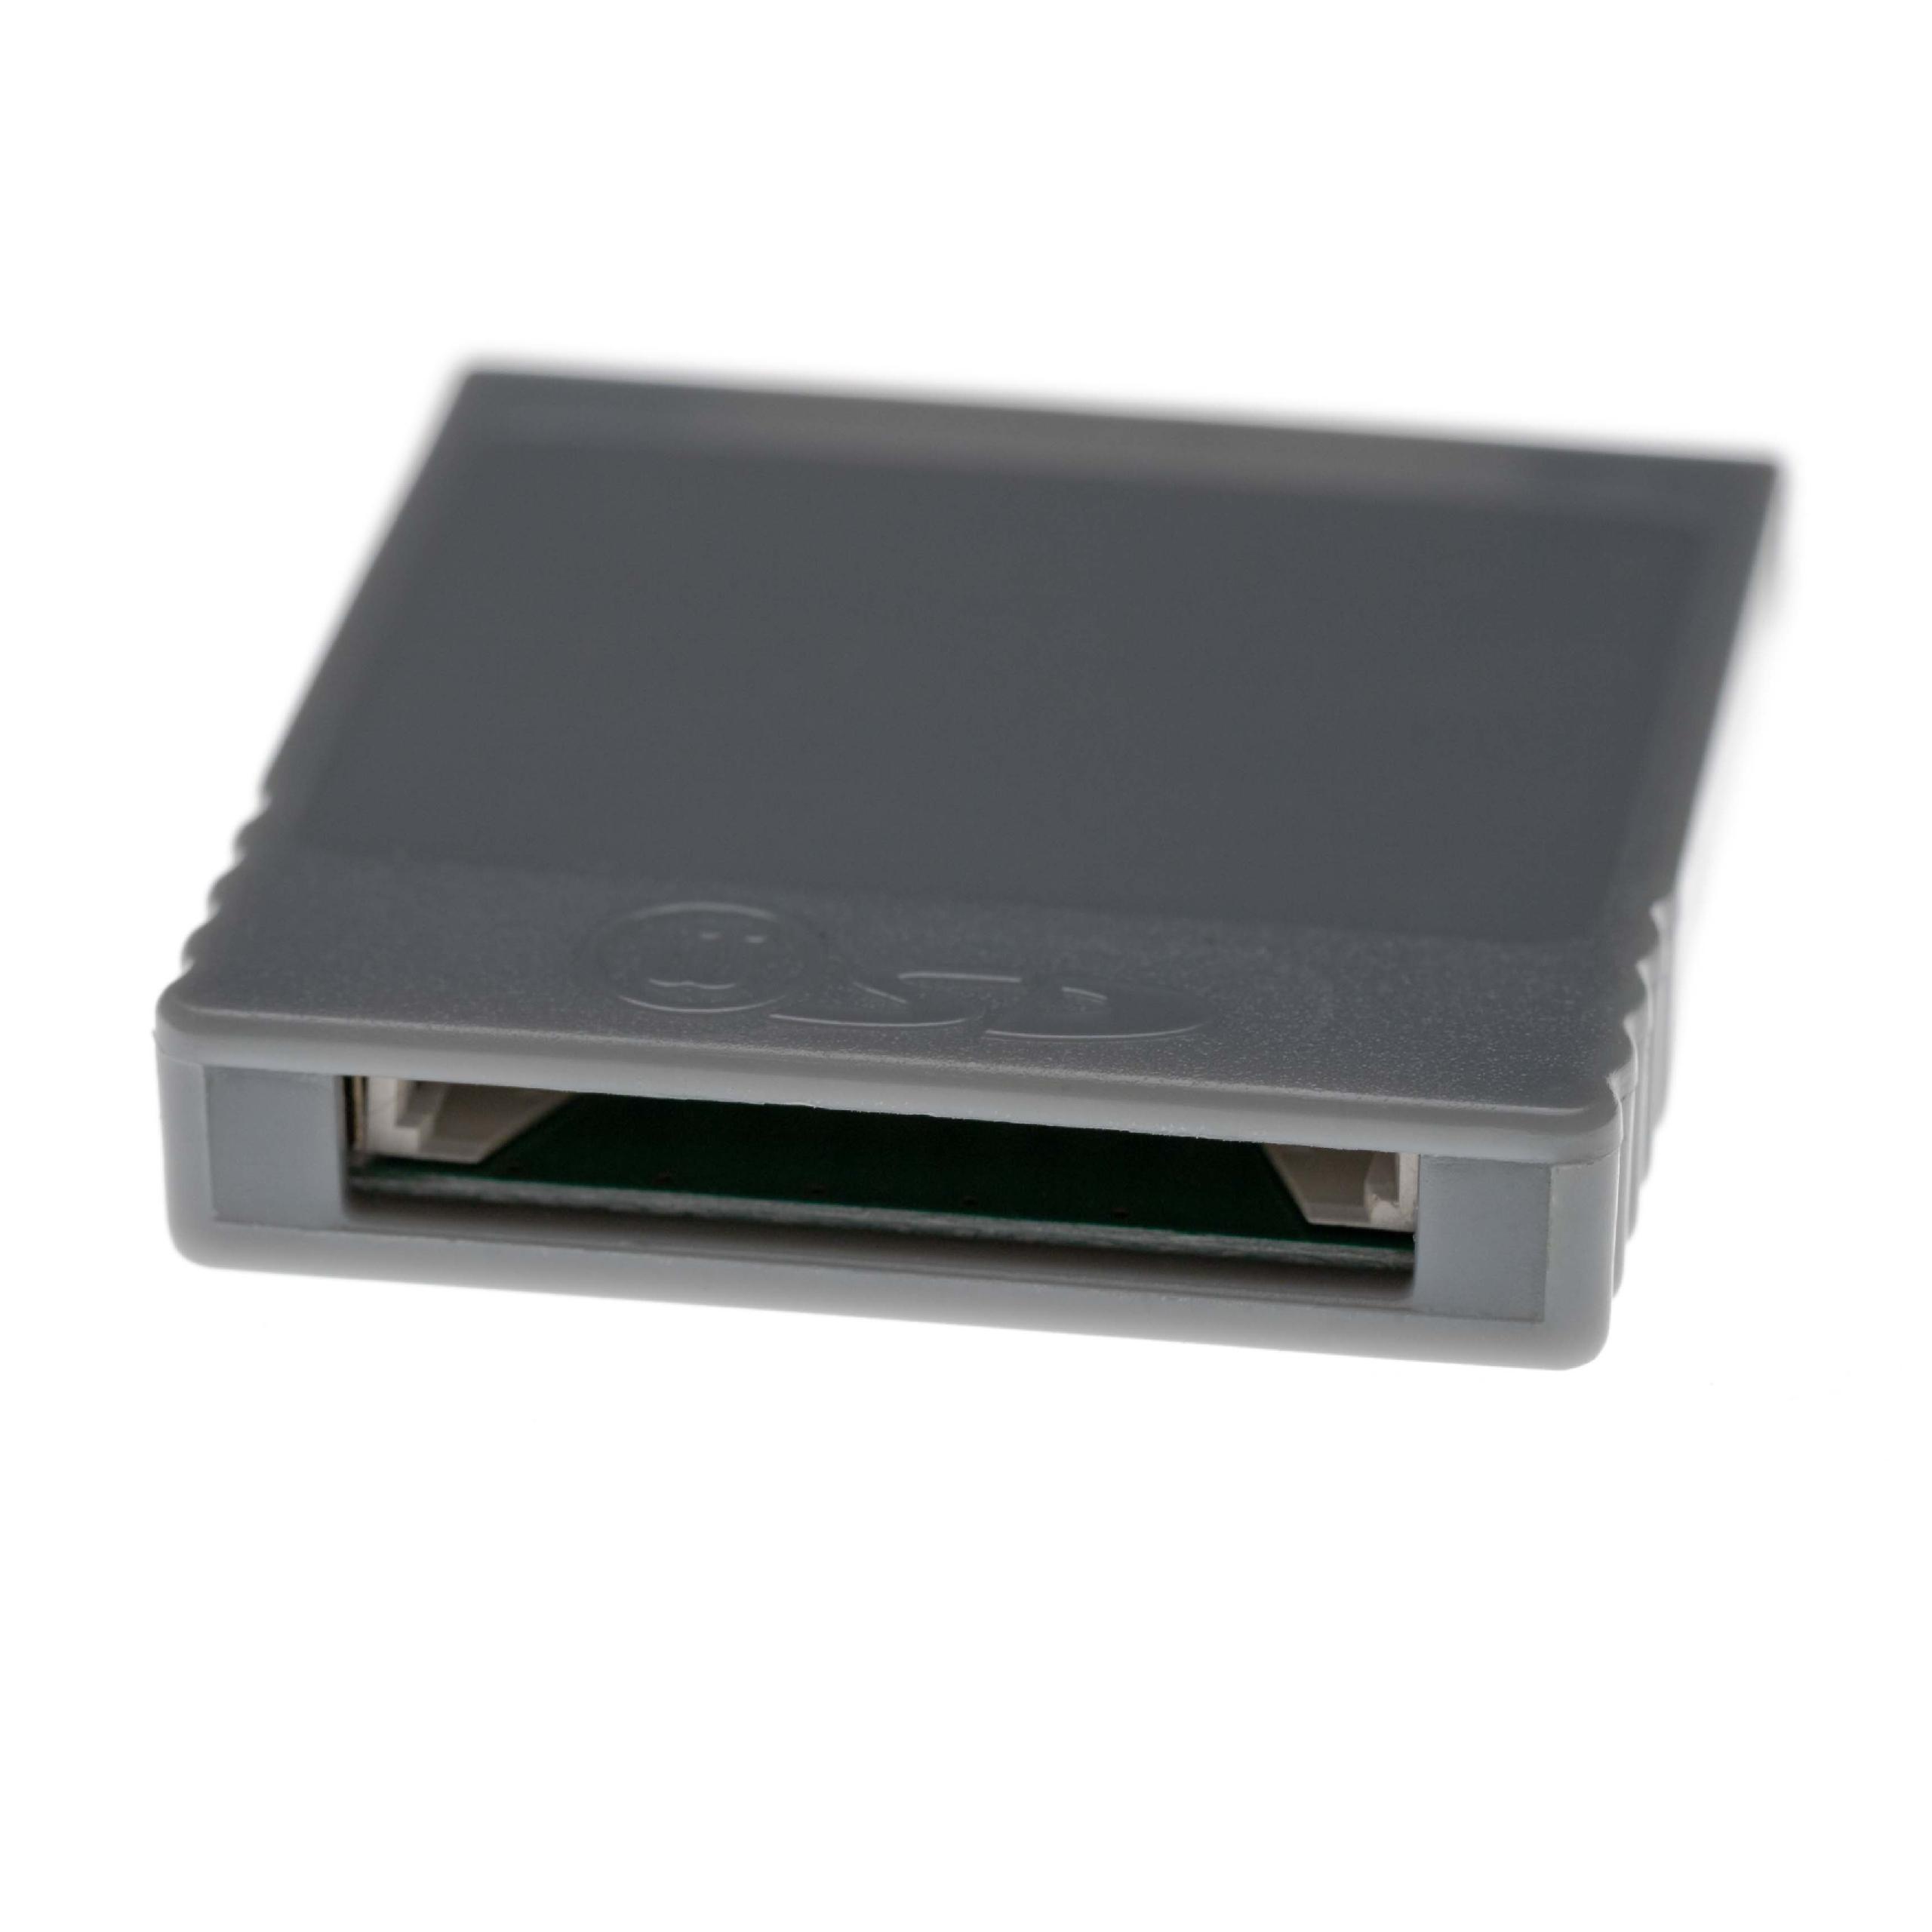 Adaptador de tarjeta SD para consola de juegos Nintendo GameCube, Wii - Conversor de tarjetas SD